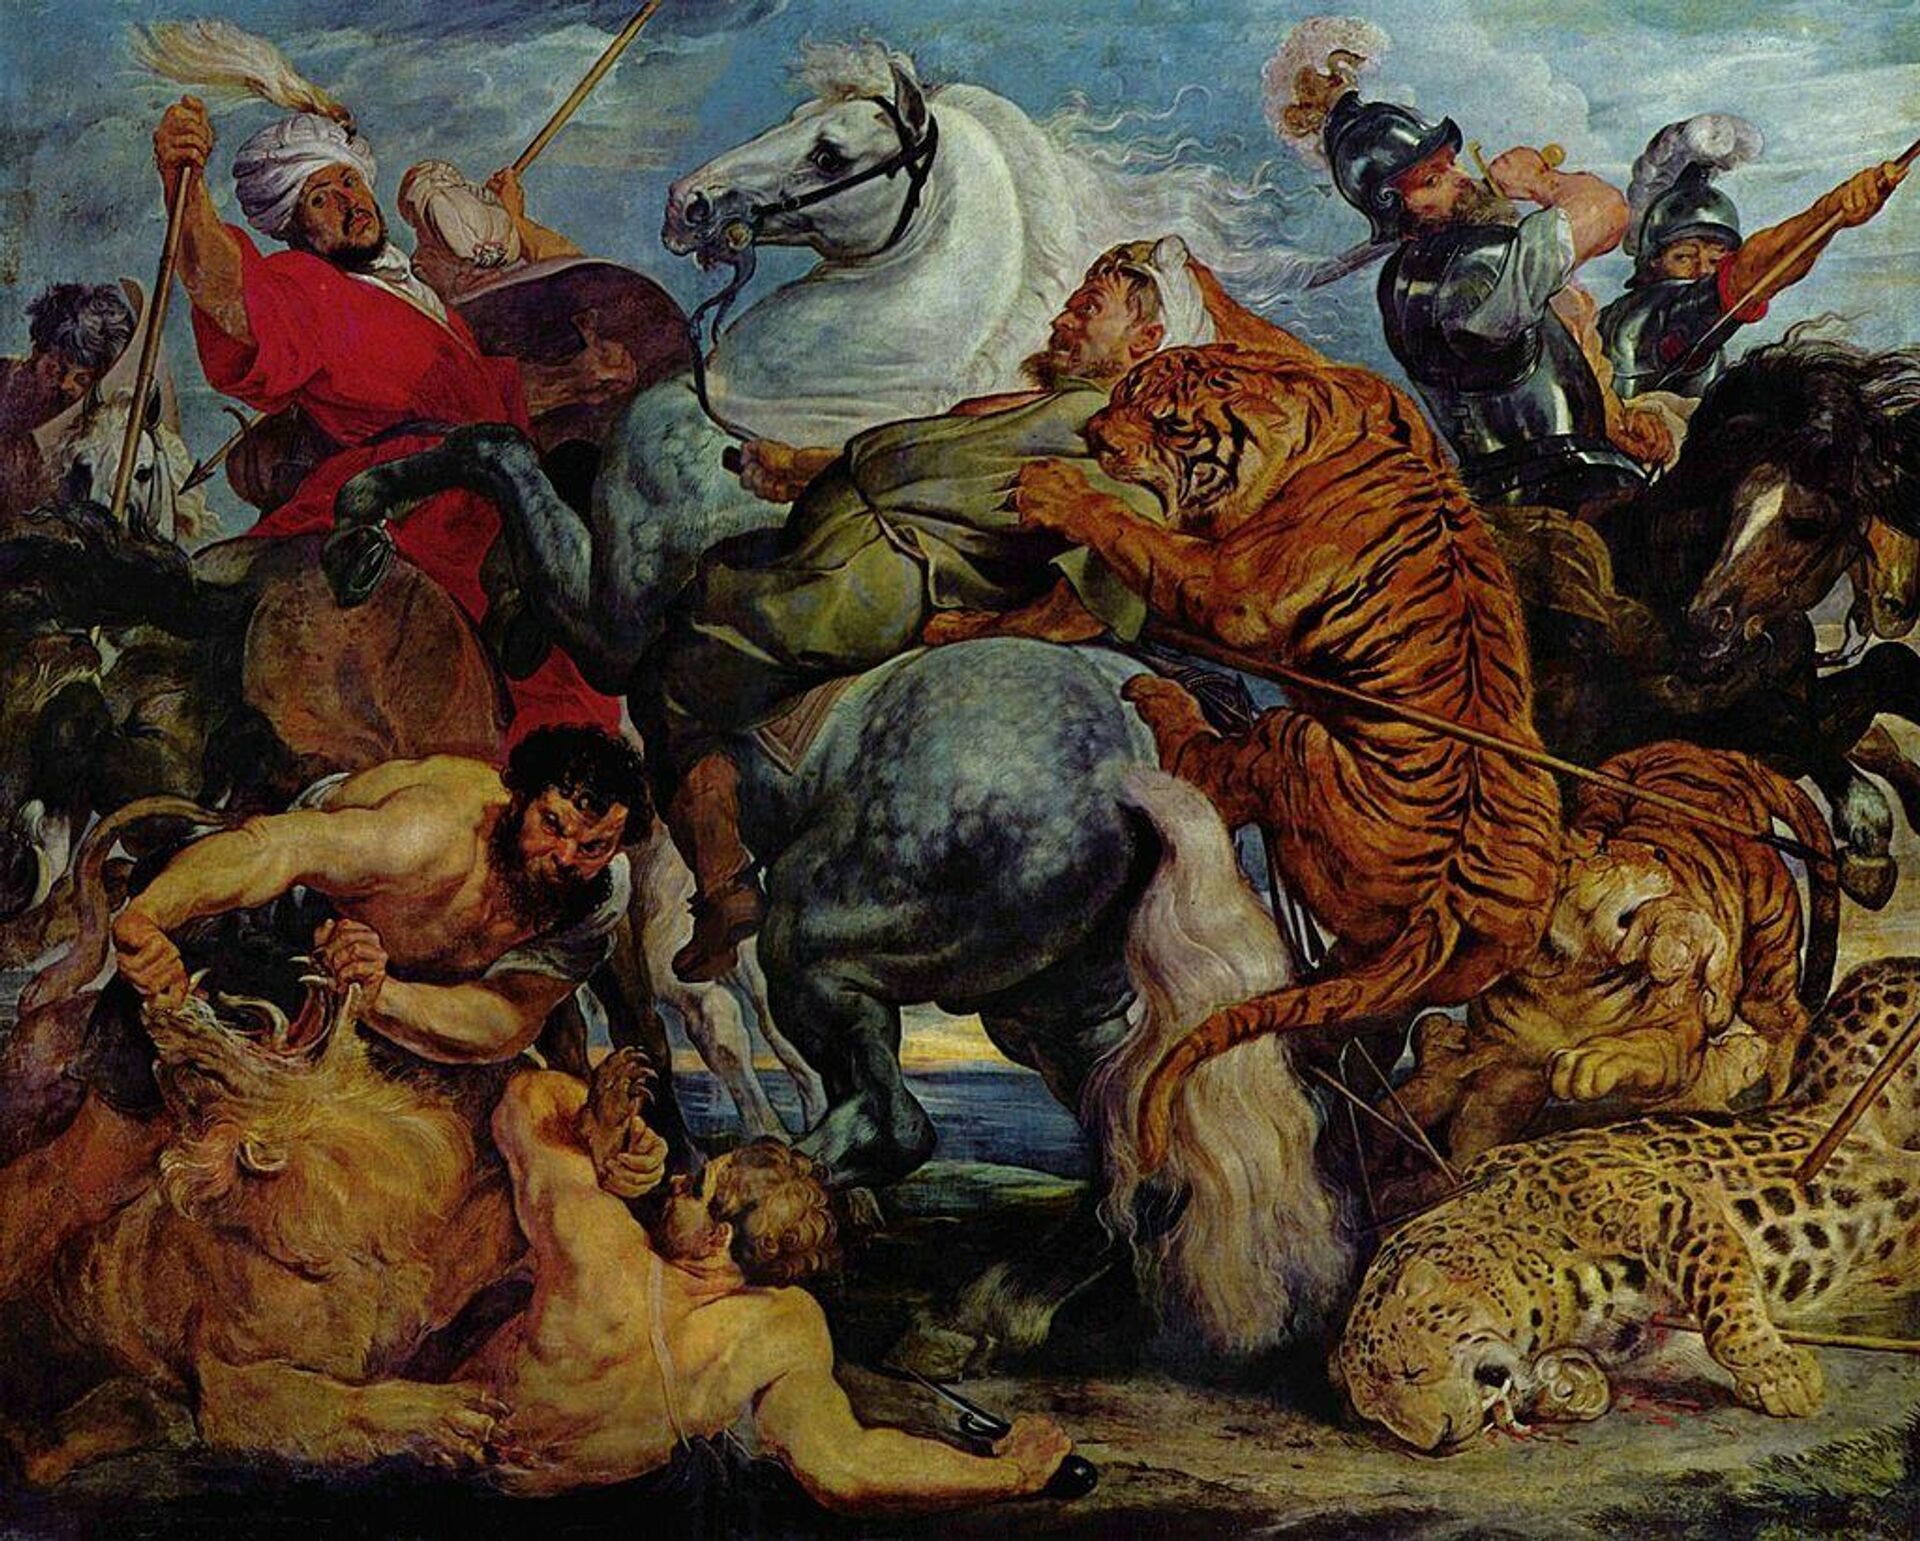 Картина Питера Пауля Рубенса Охота на тигров и львов (1618) - Sputnik Беларусь, 1920, 20.12.2021